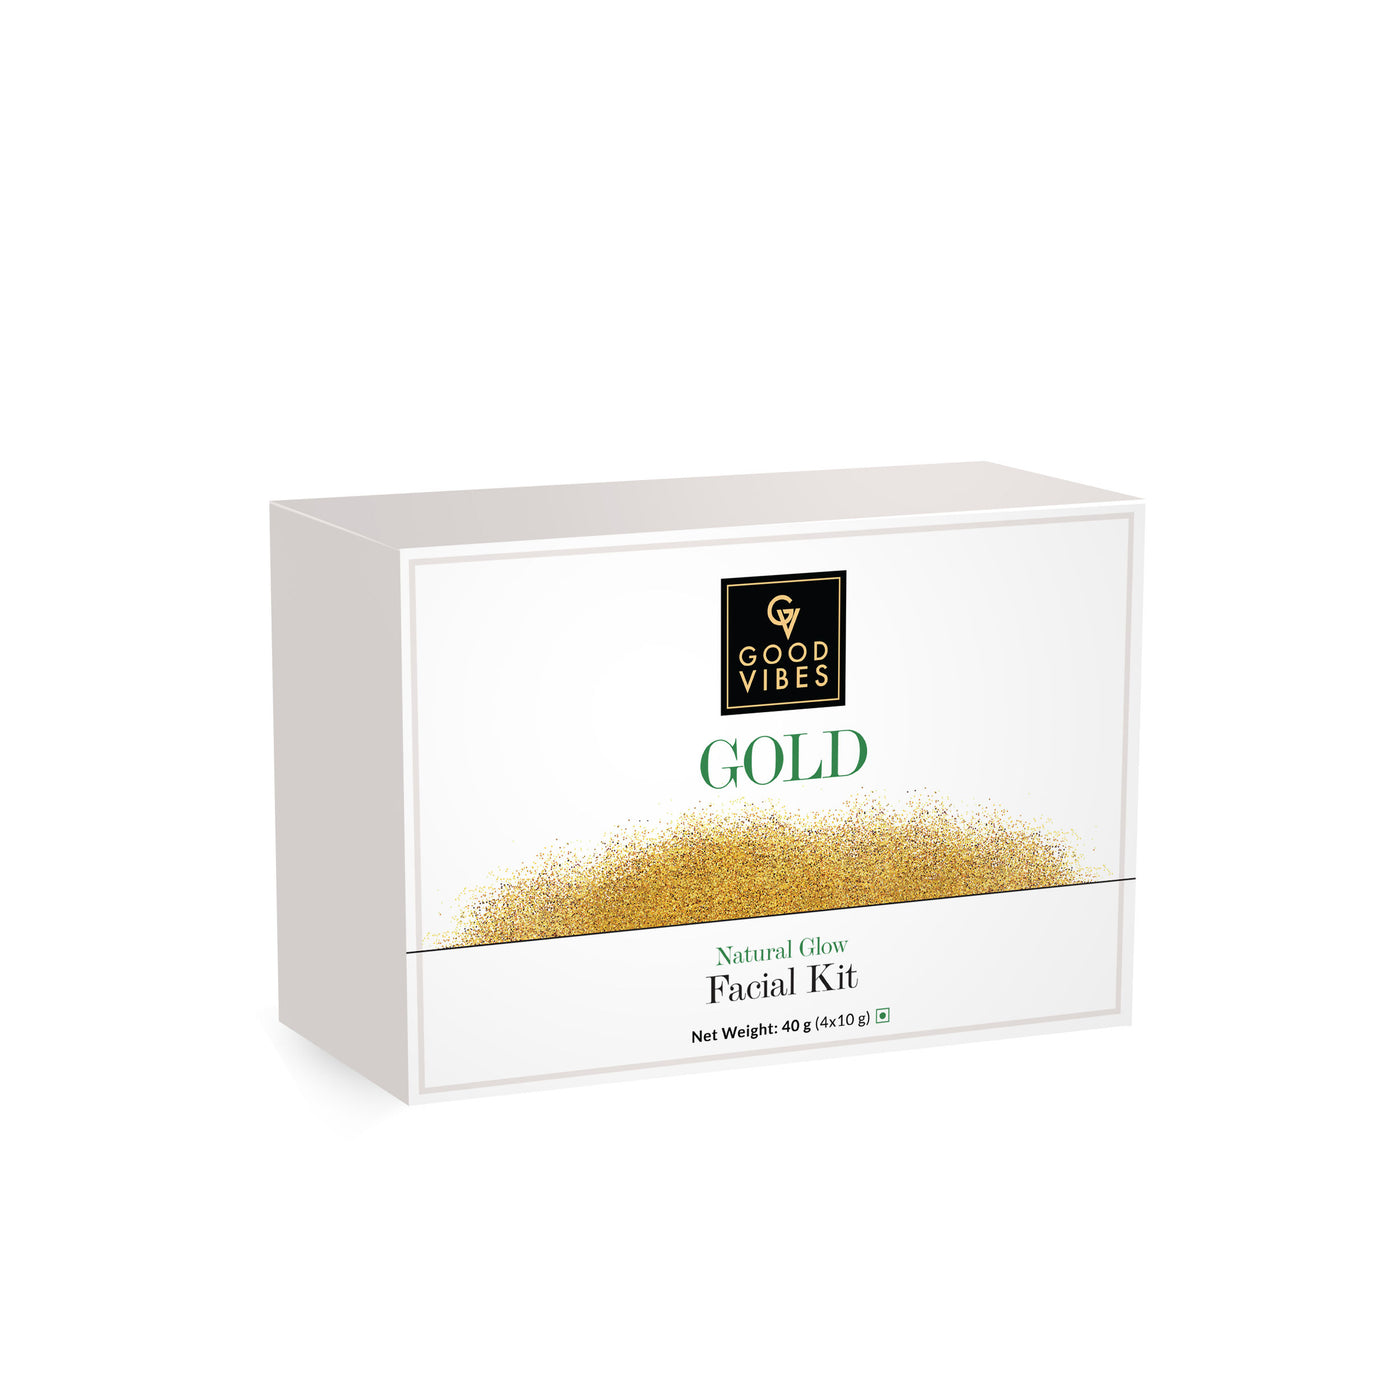 Good Vibes Natural Glow Facial Kit - Gold (40 g) - 1